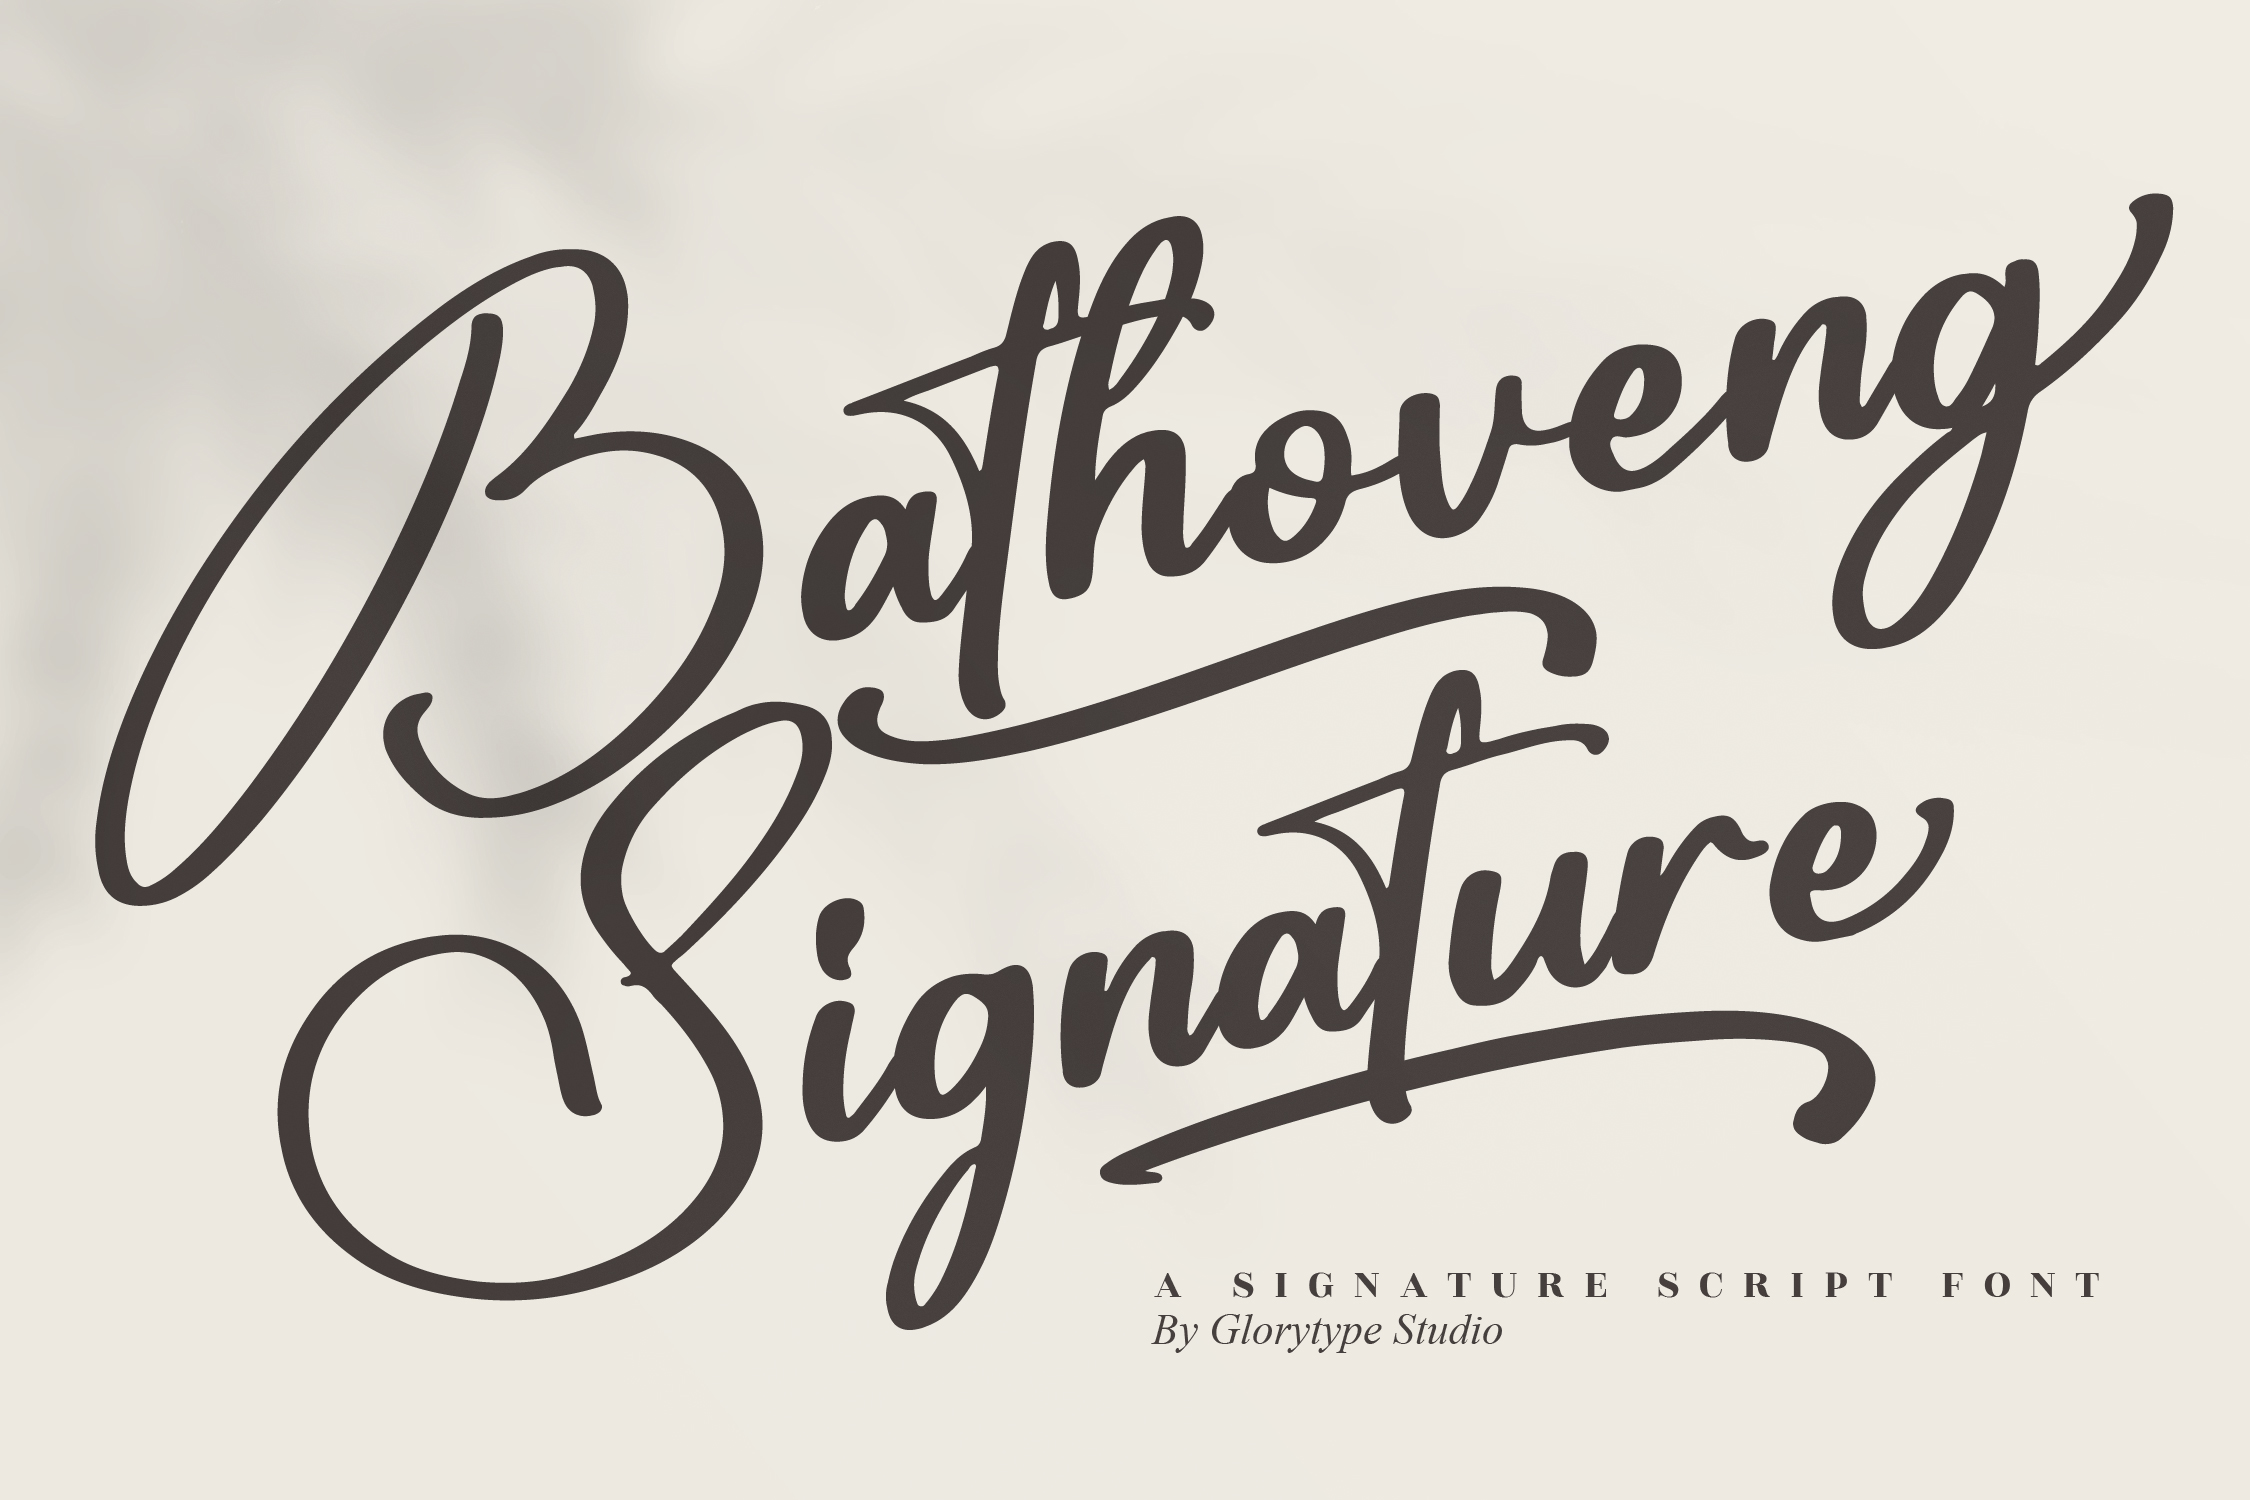 Bathoveng Signature